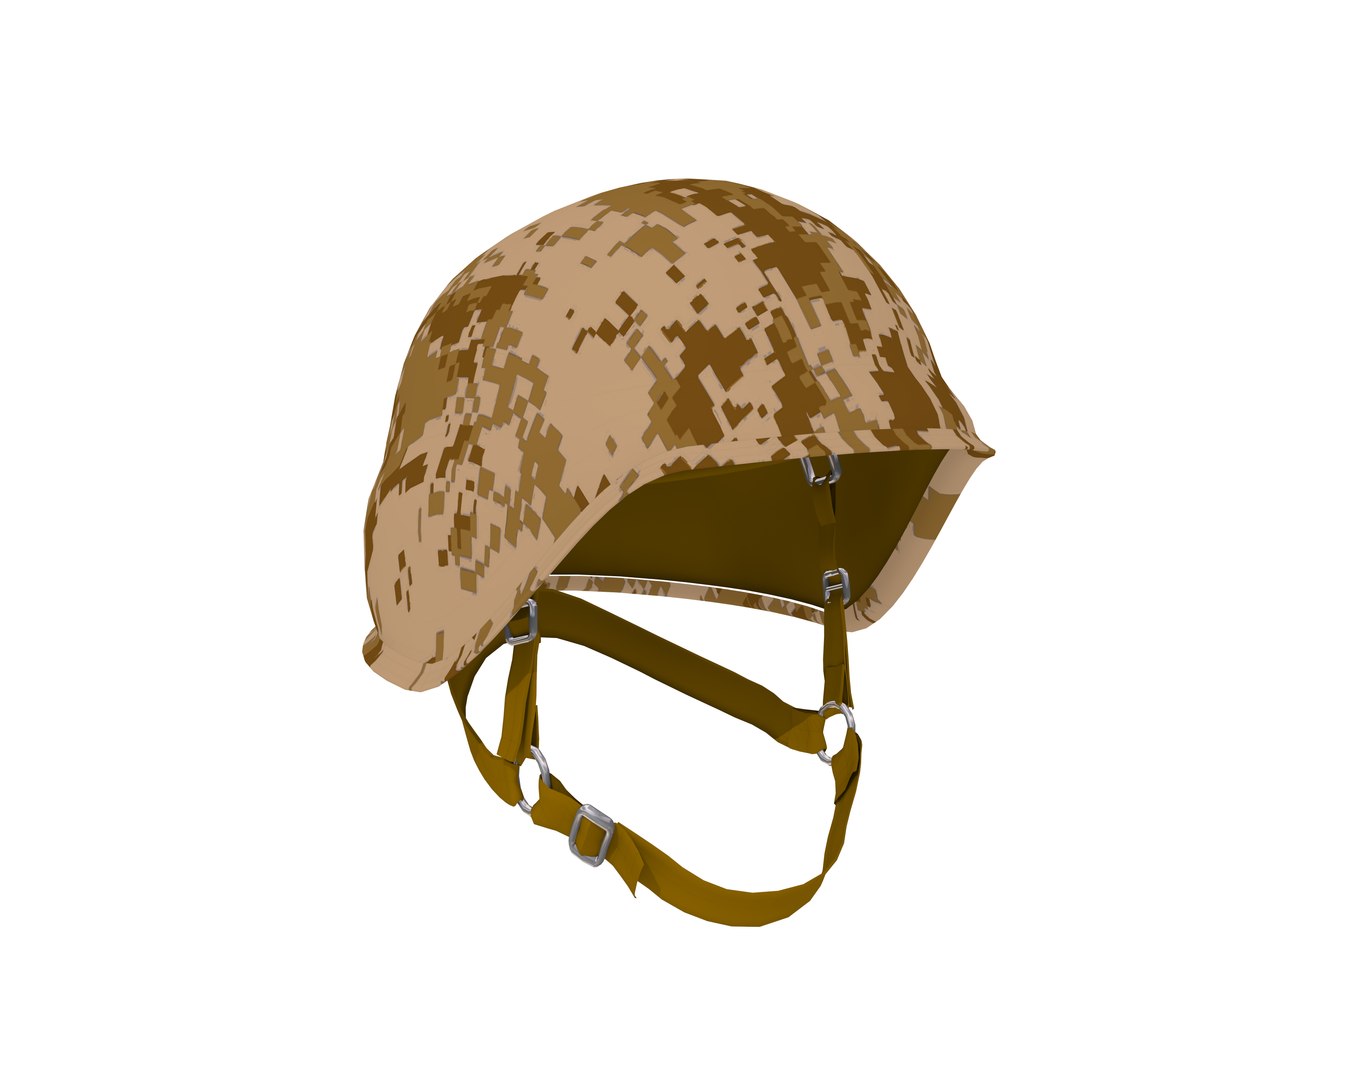 advanced combat helmet